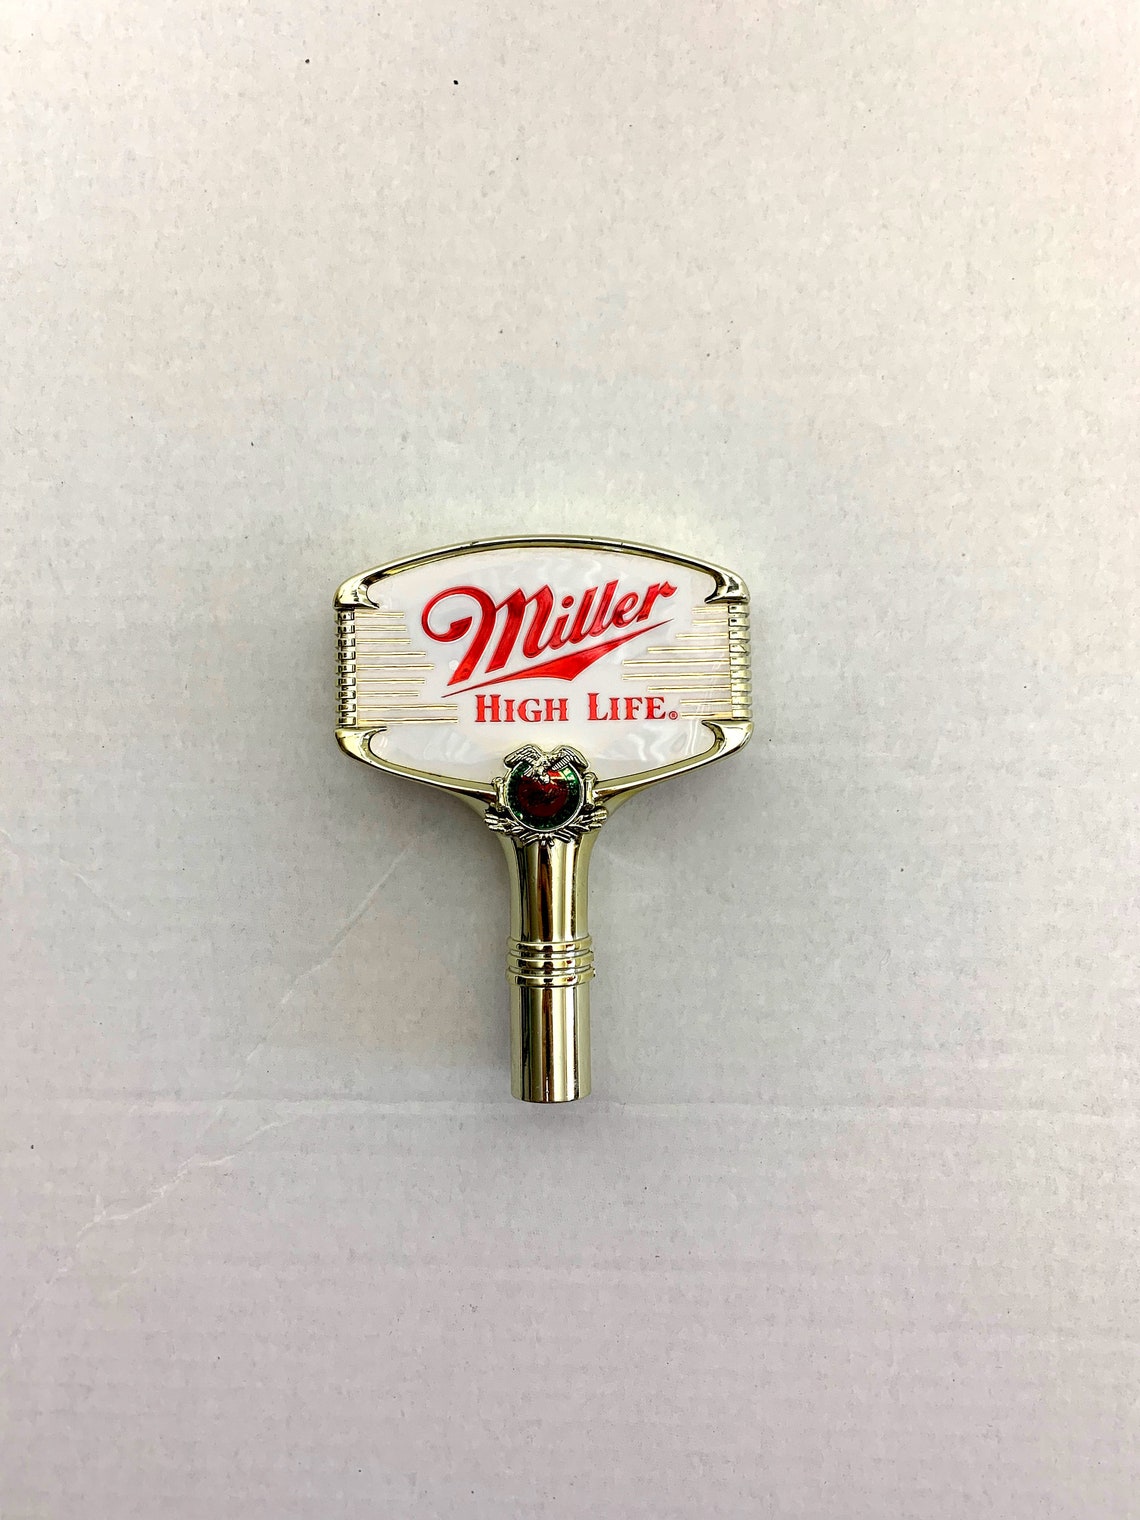 Vintage Miller High Life Tap Handle Vintage Beer Tap Handles | Etsy